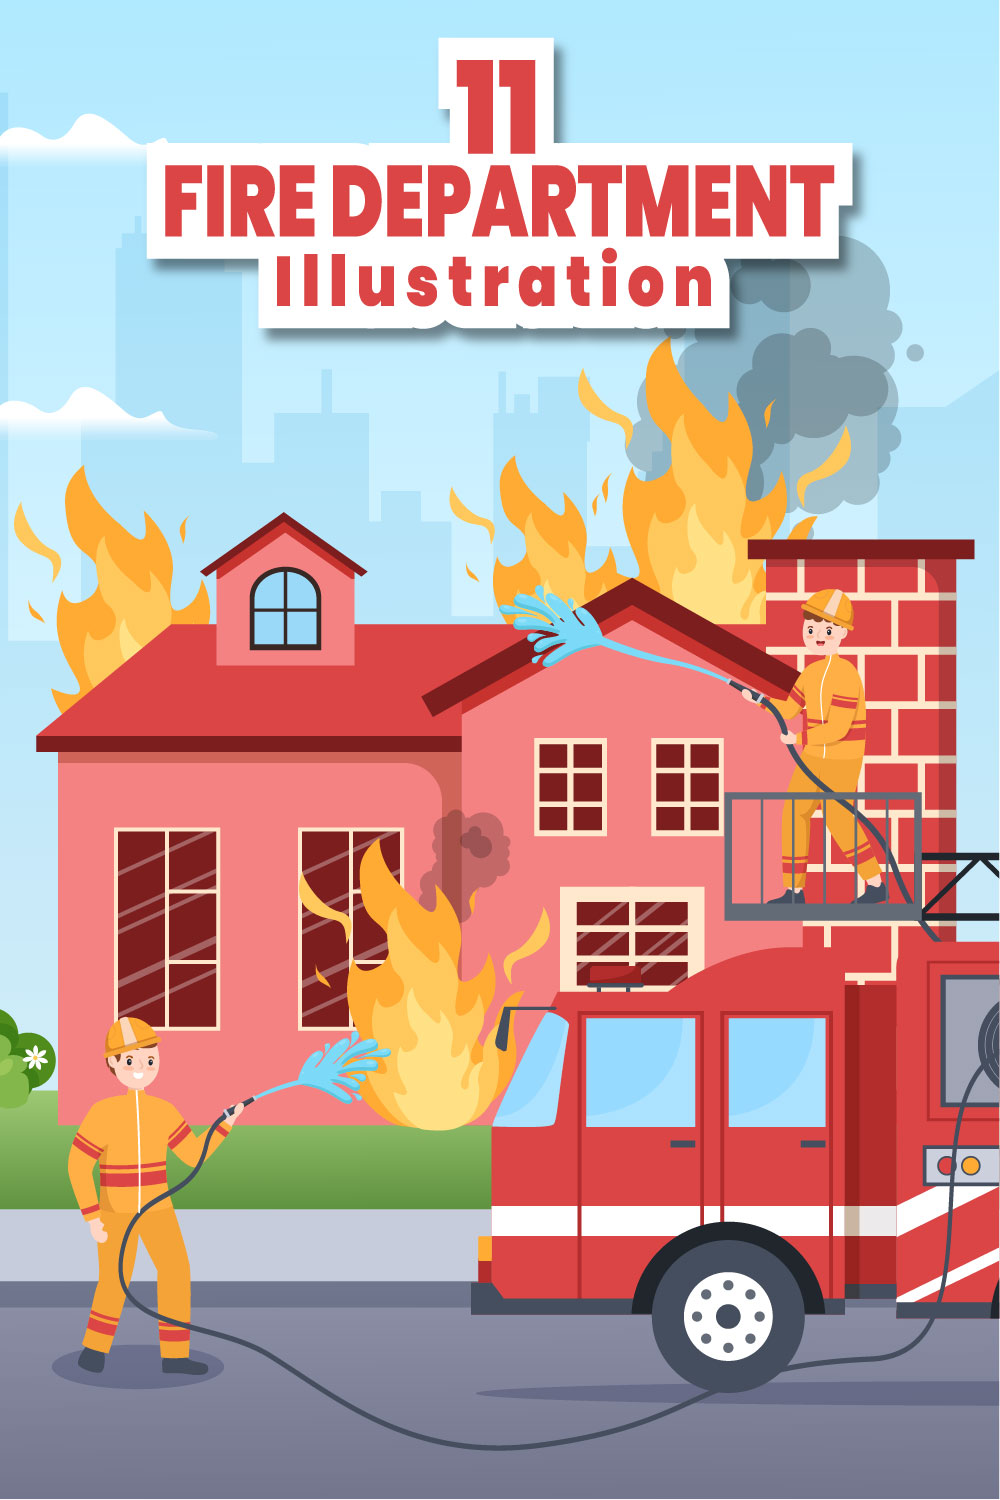 Fire Department or Firefighter Illustration pinterest image.